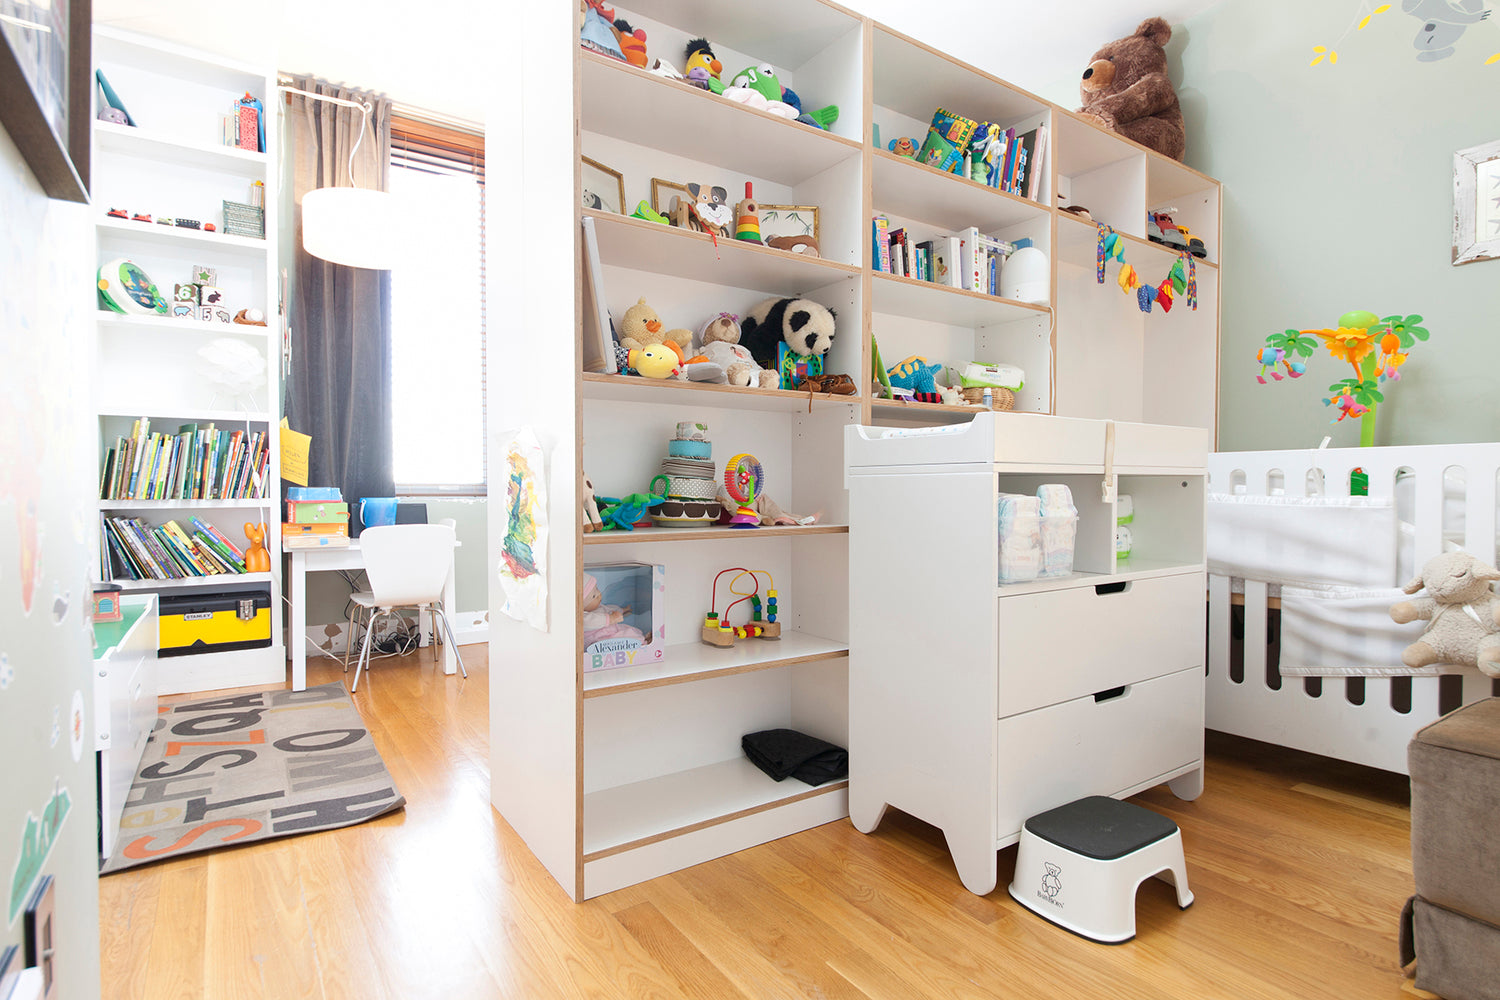 Bright nursery with crib, bookshelf, toys, and colorful decor.